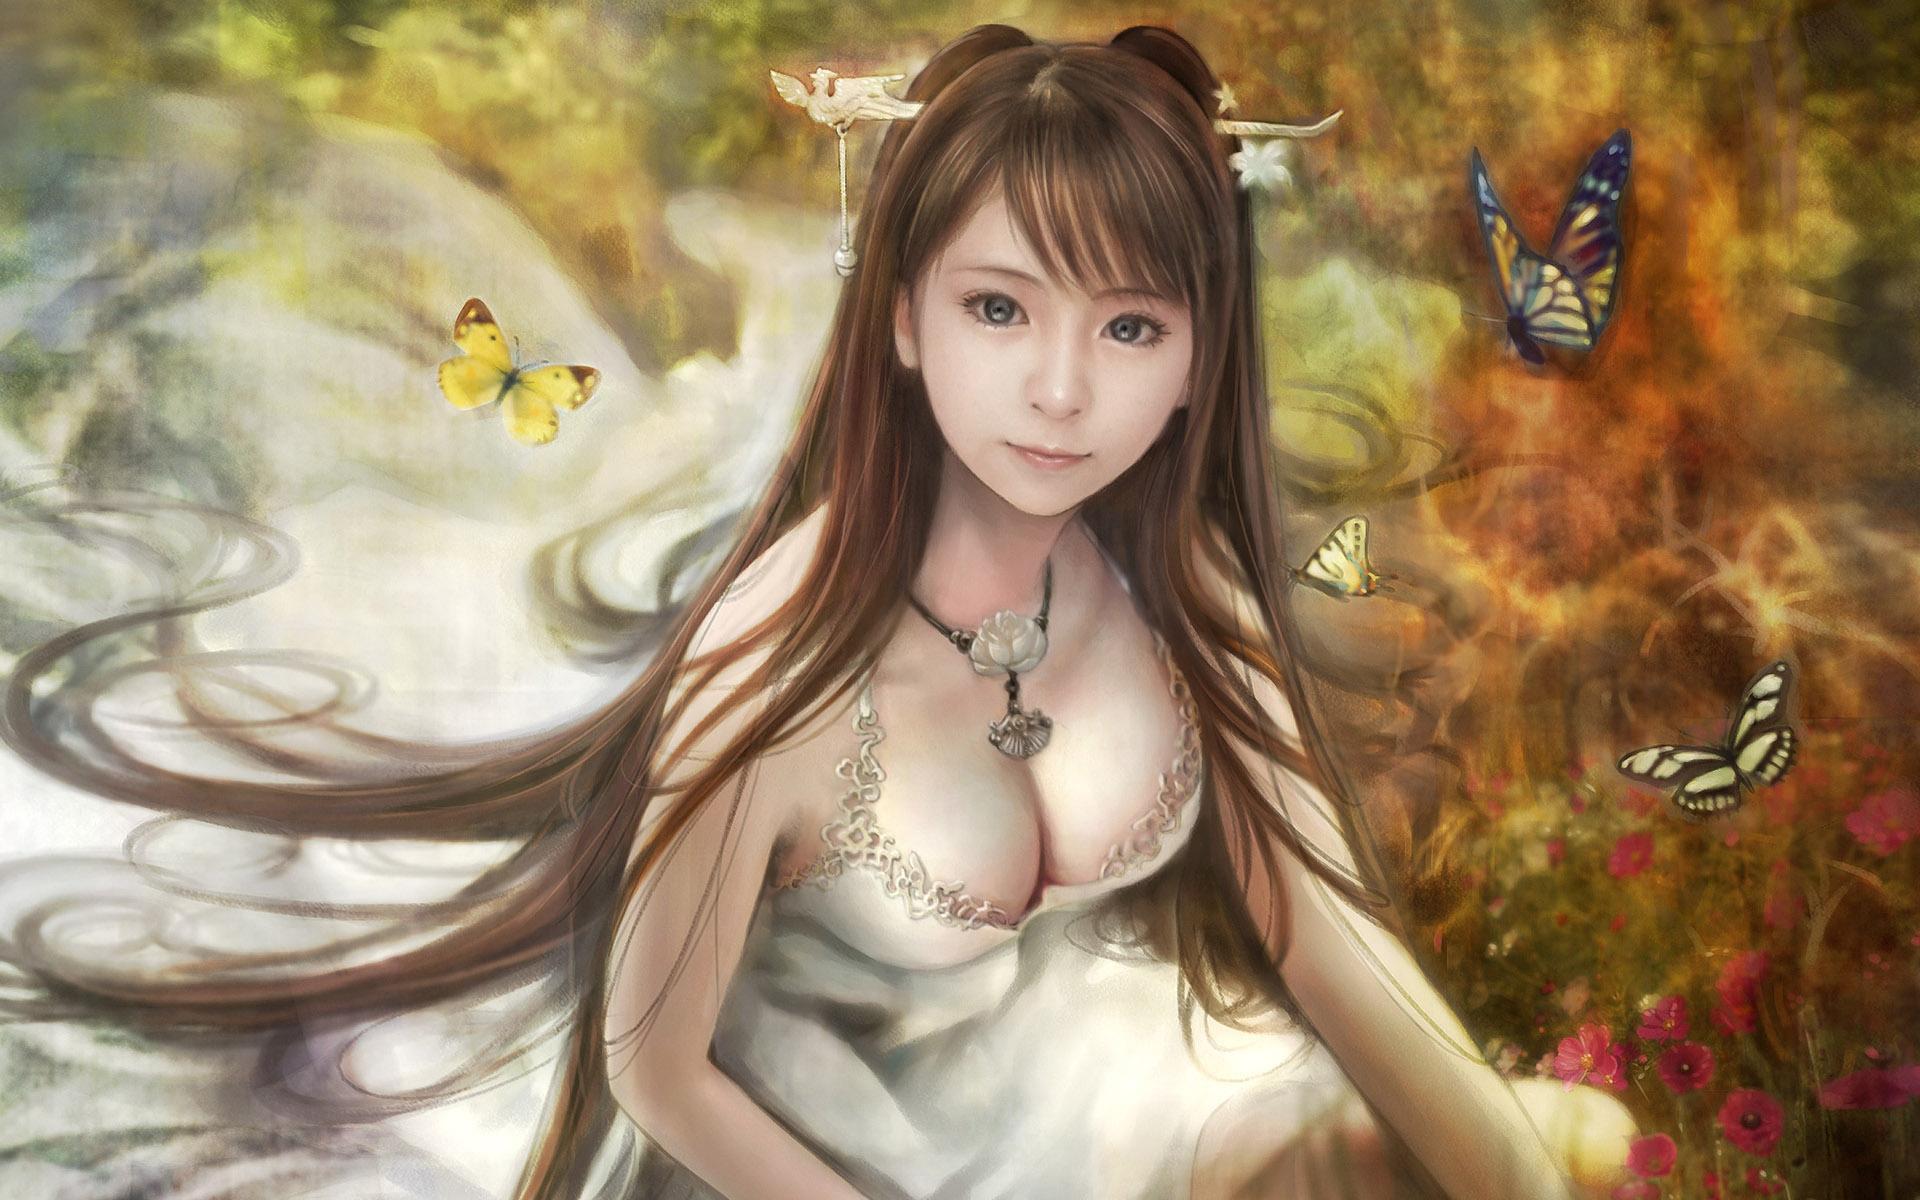 CG beautiful girl wallpaper by I Chen Lin Taiwan   Fantasy Wallpaper